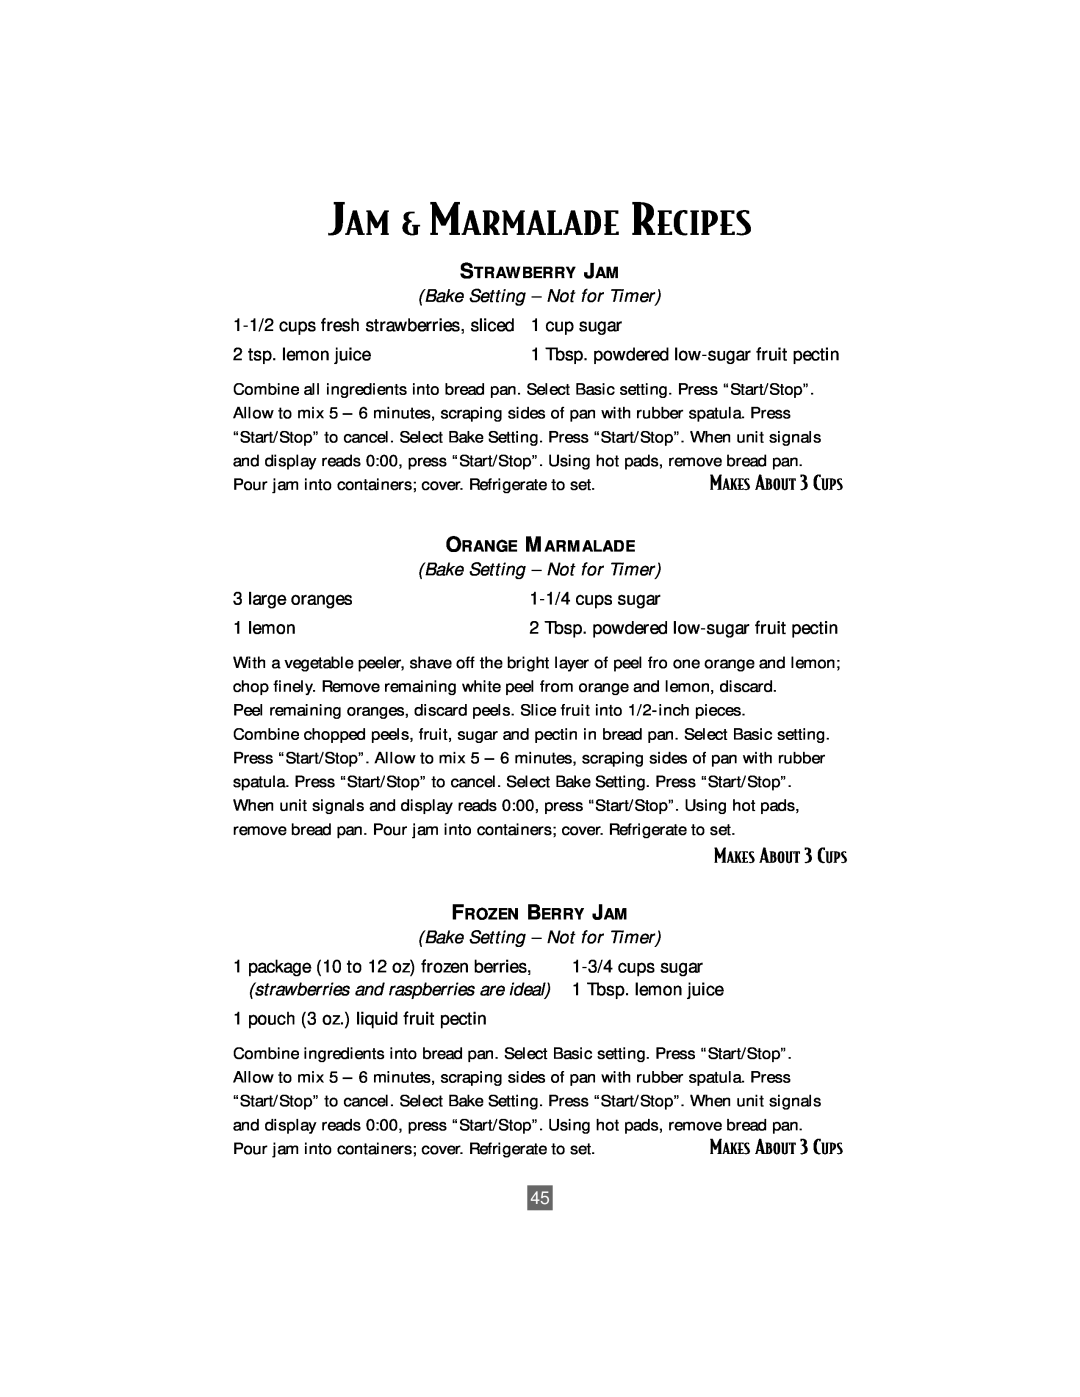 Sunbeam Bread/Dough Maker manual Jam & Marmalade Recipes, Bake Setting - Not for Timer 